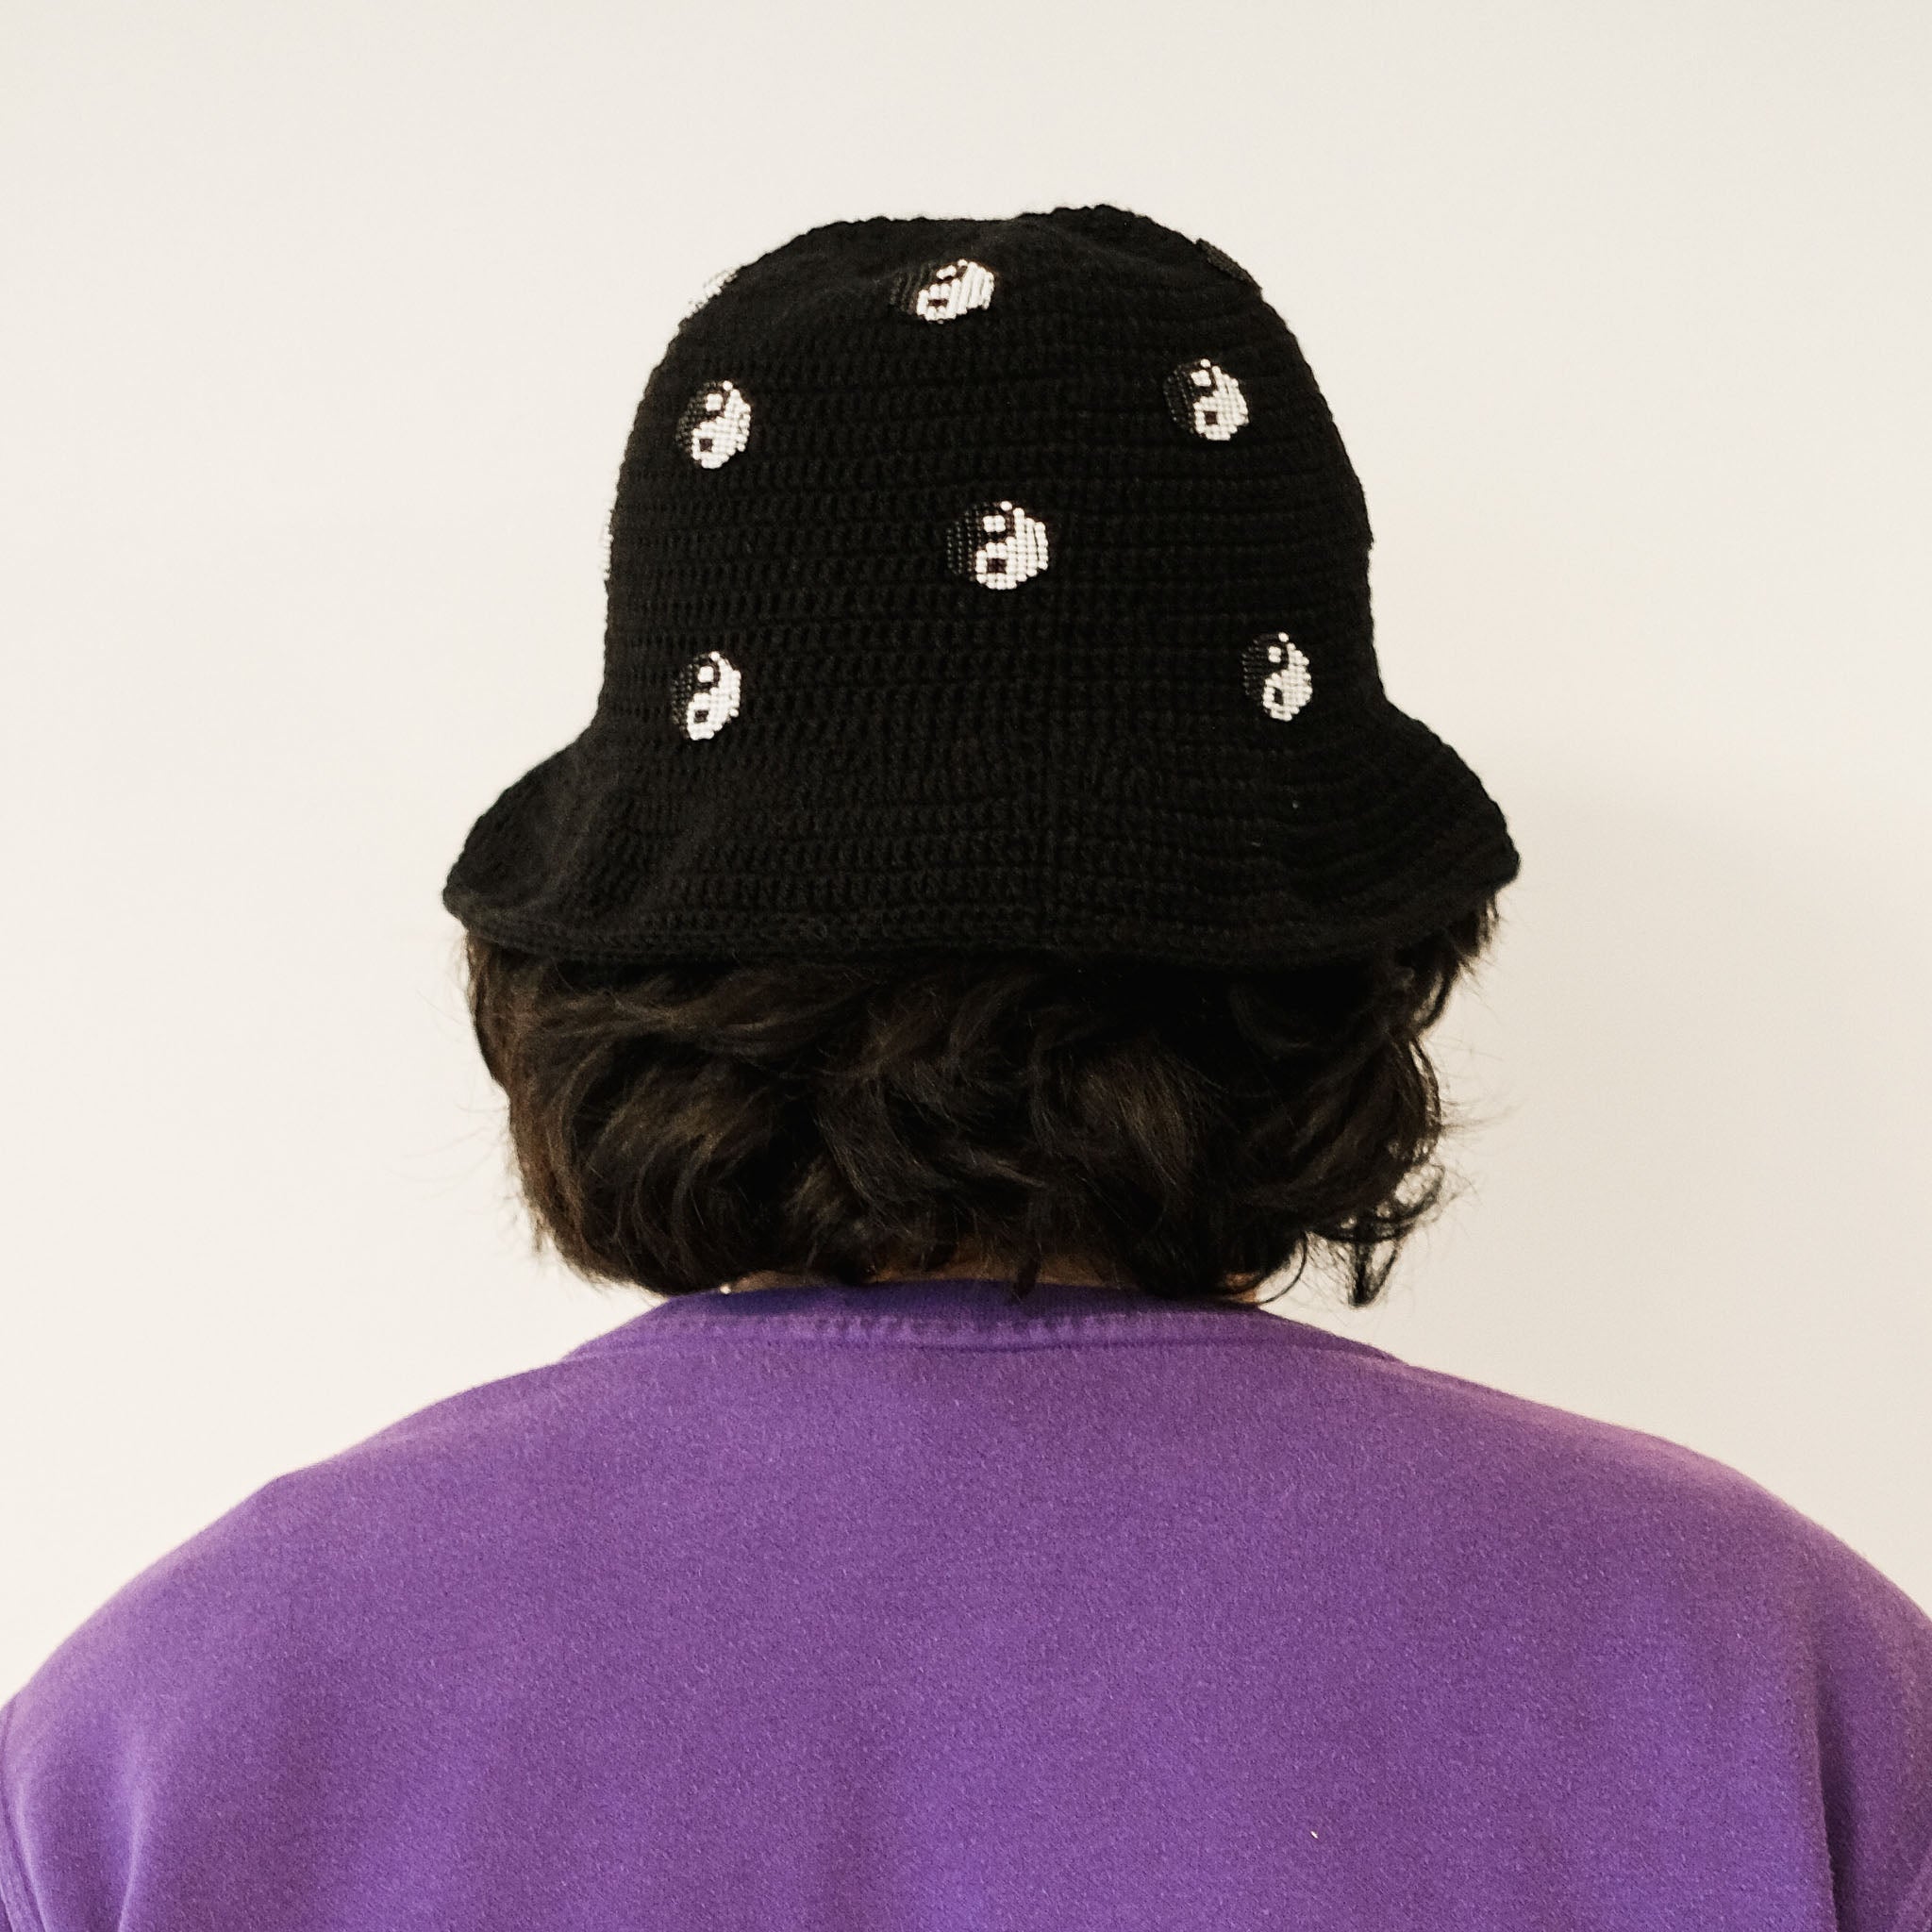 Black Crochet yin yang hat from the back